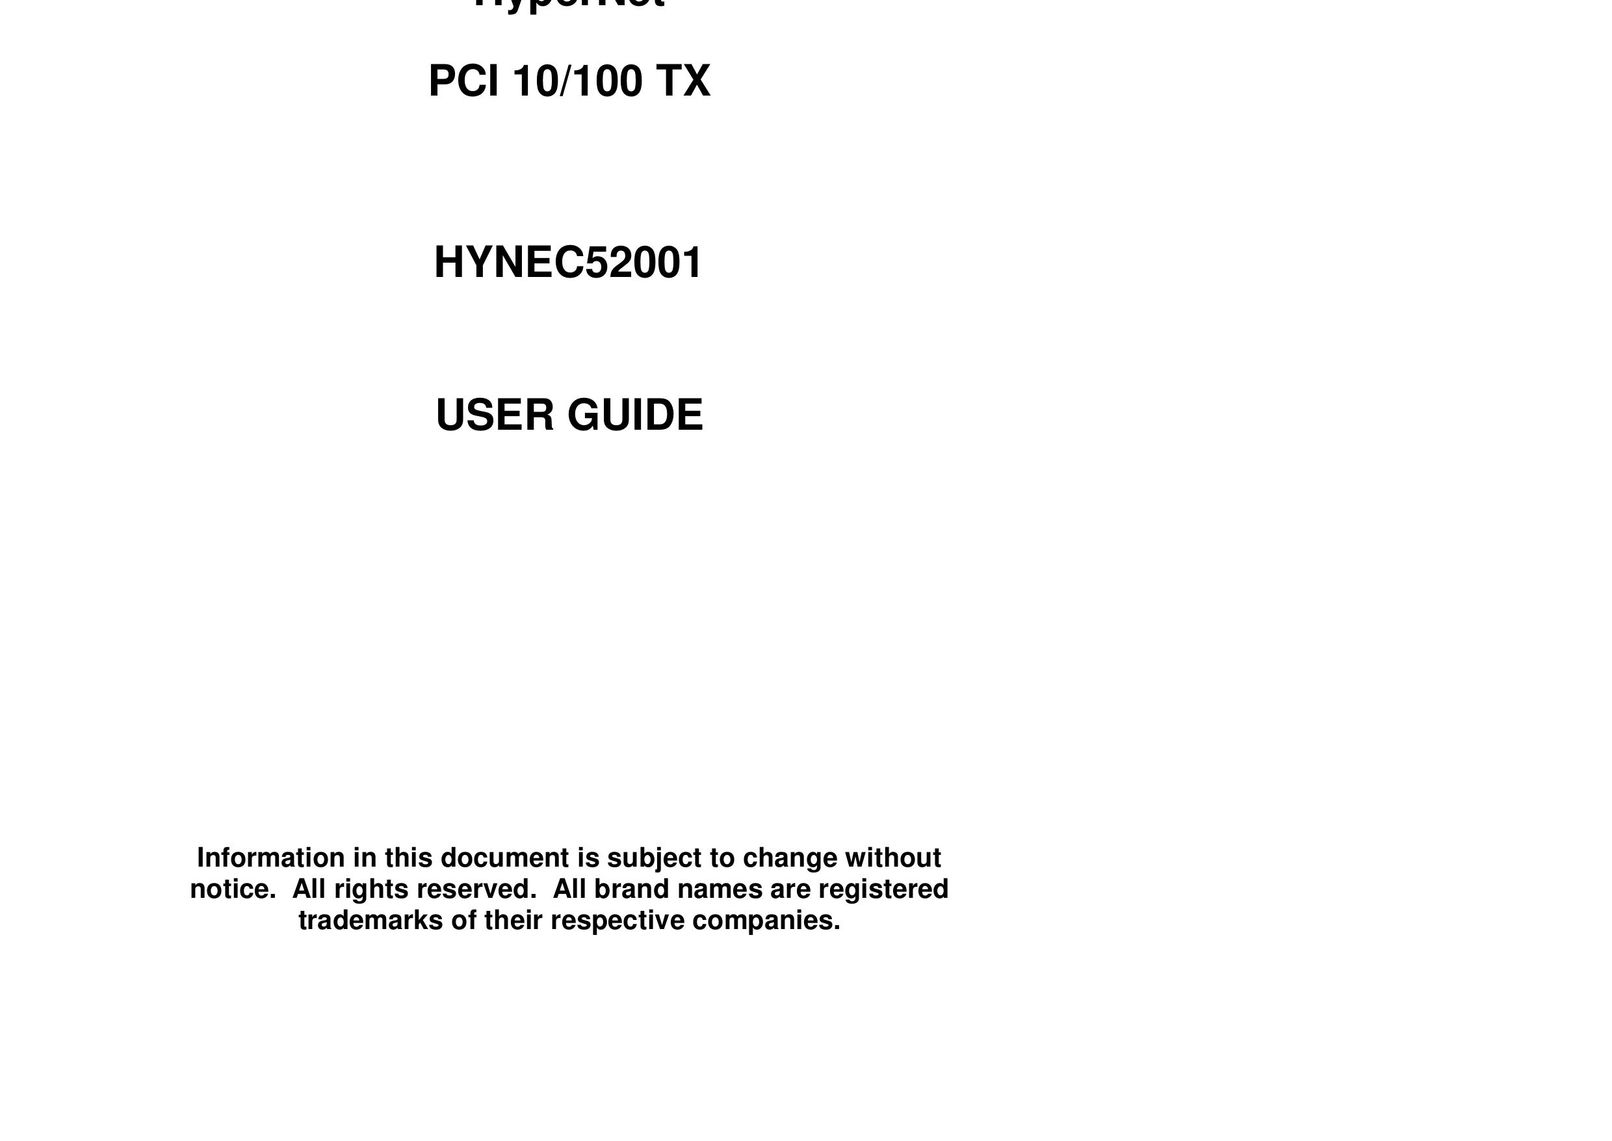 Hypertec PCI 10/100 TX Network Card User Manual